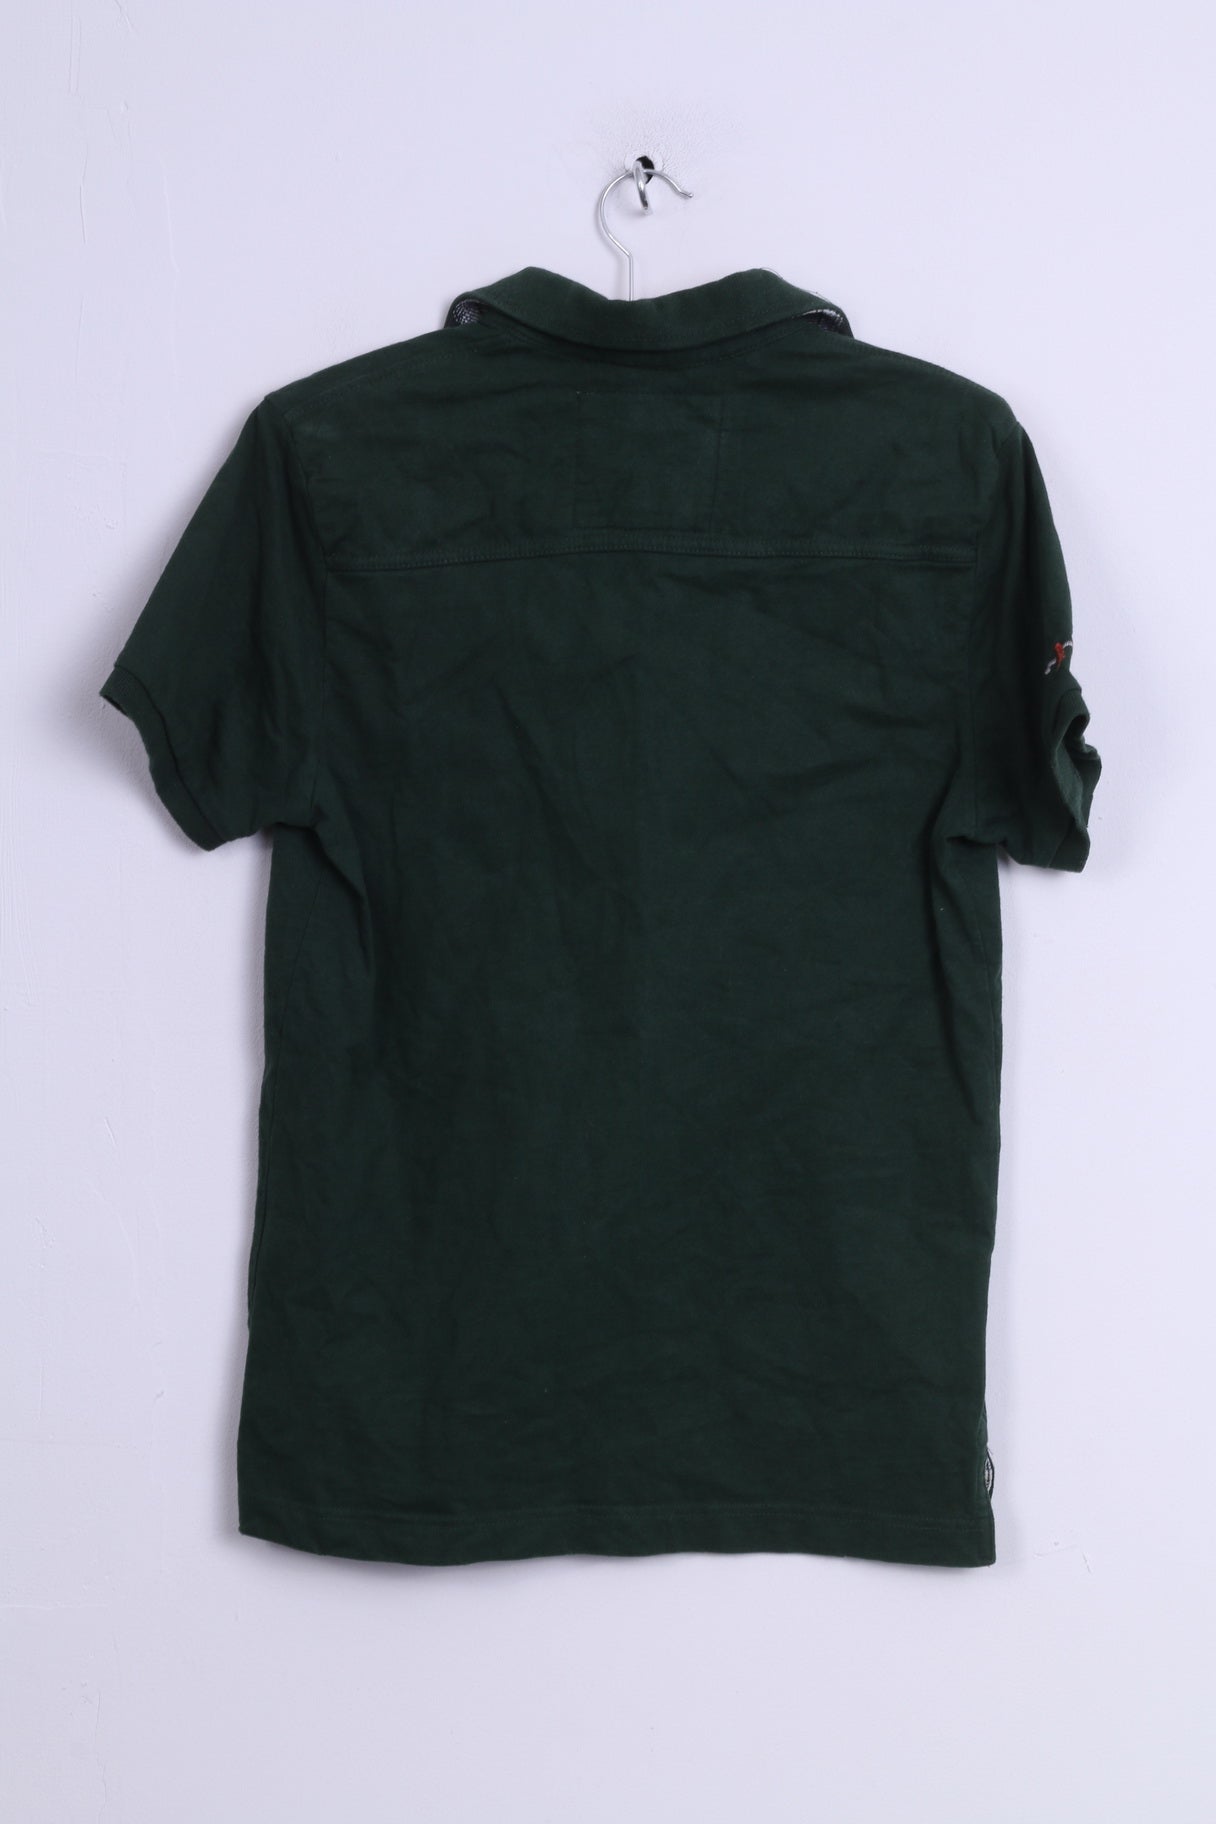 AEROPOSTALE Mens M Polo Shirt Green Cotton Short Sleeve